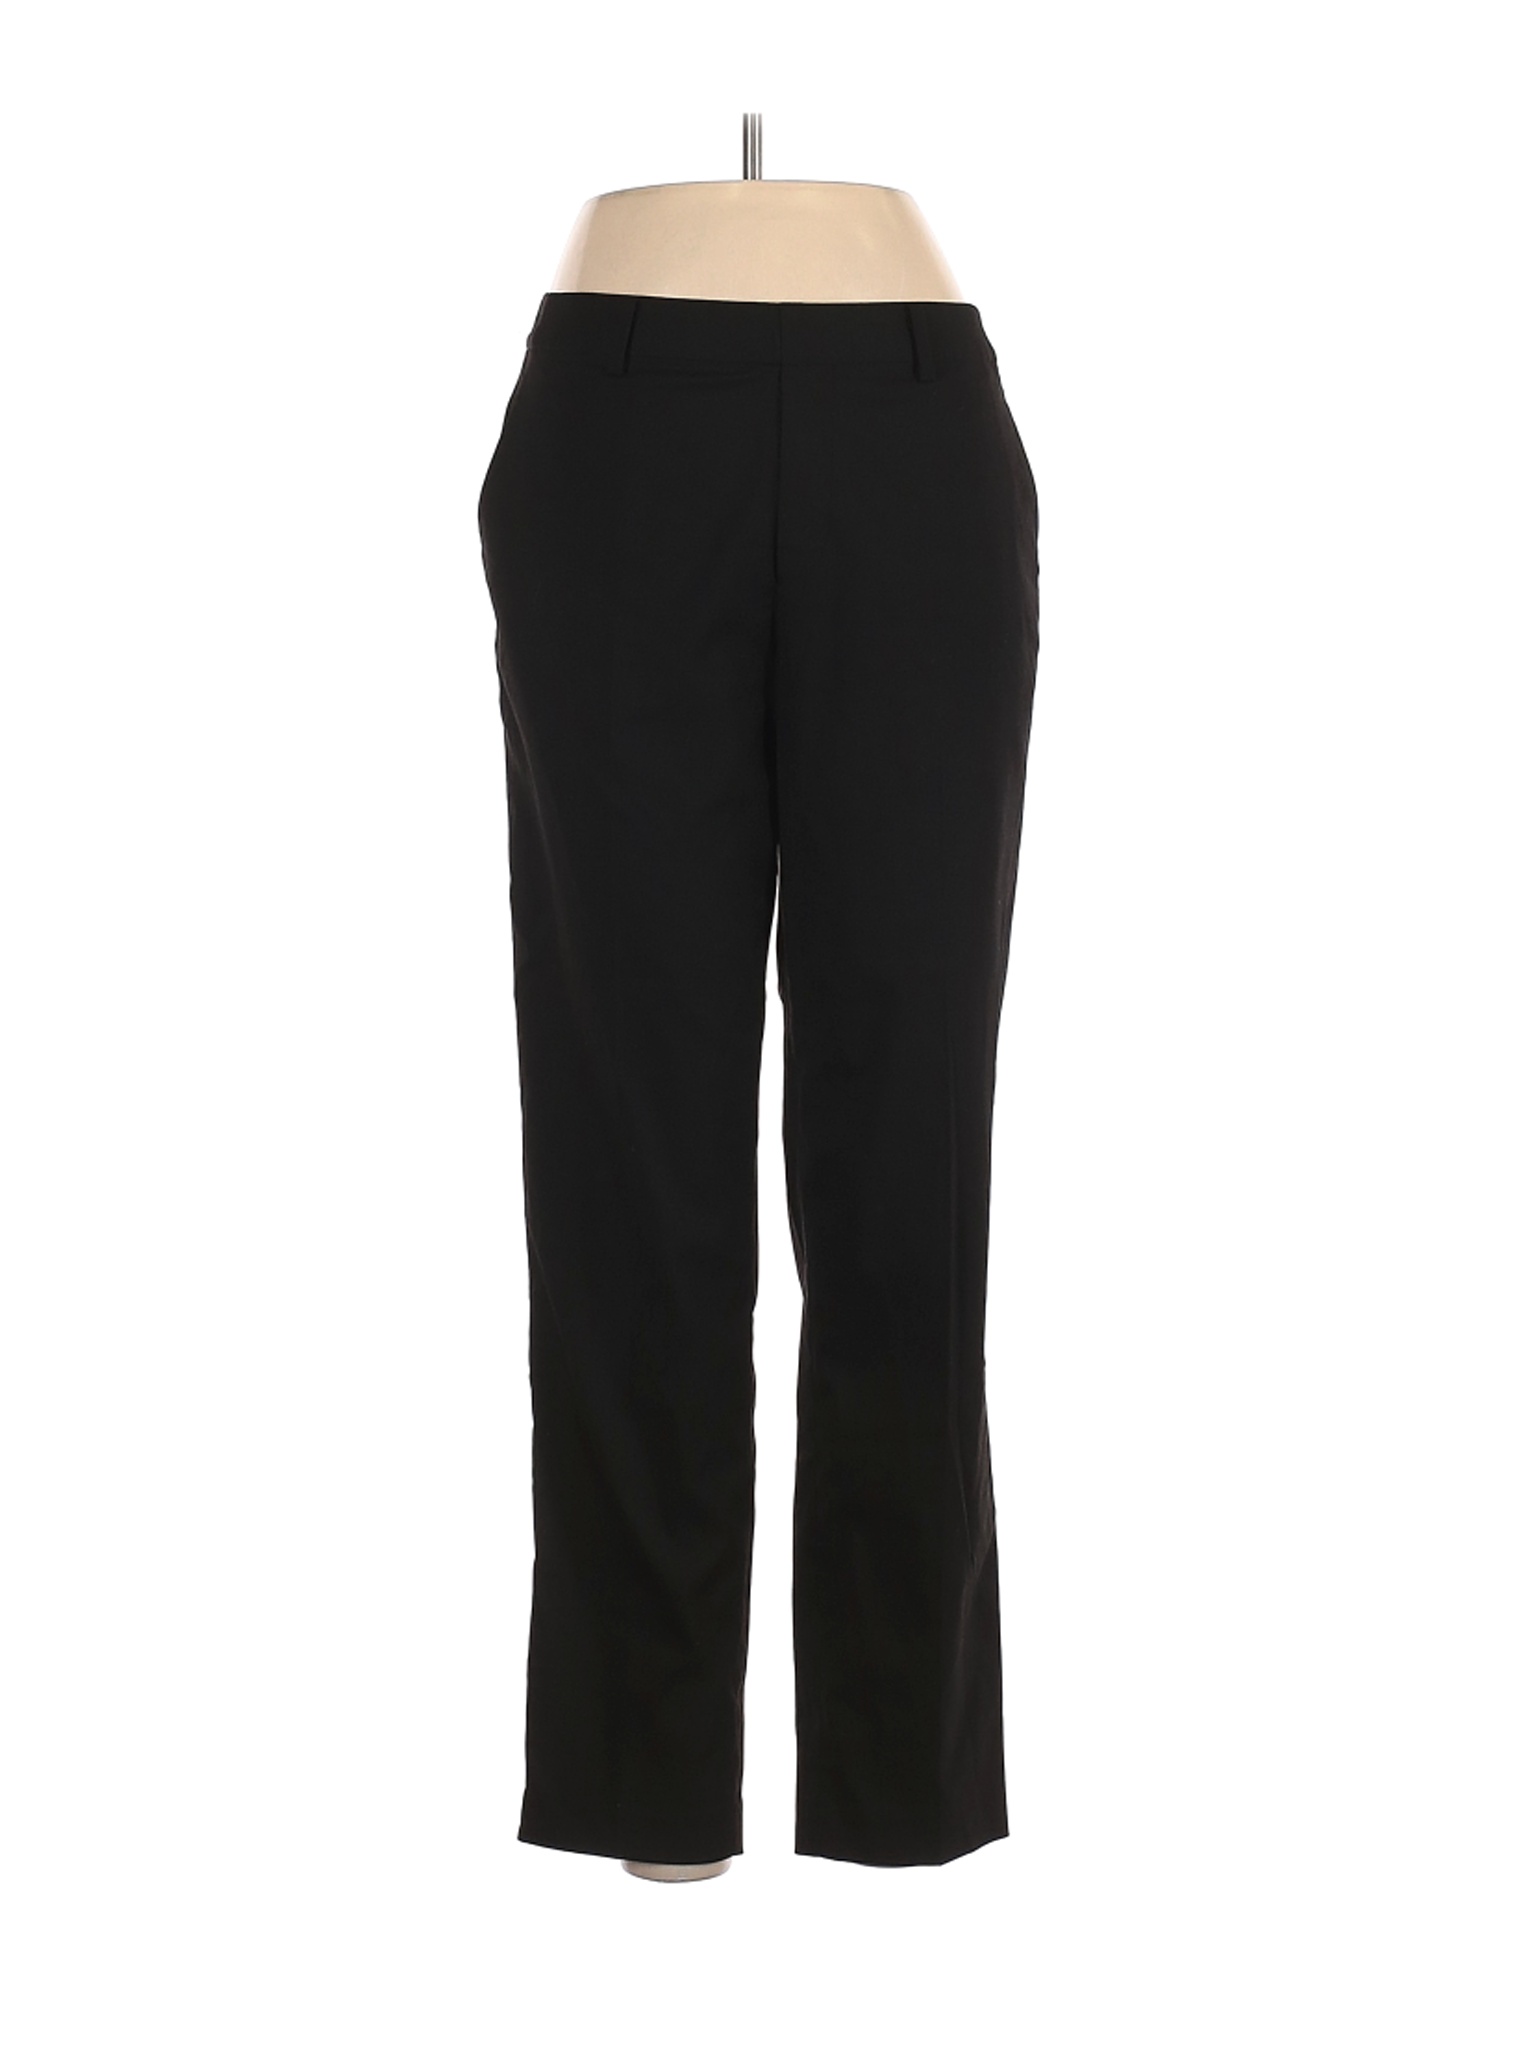 Uniqlo Women Black Casual Pants M | eBay